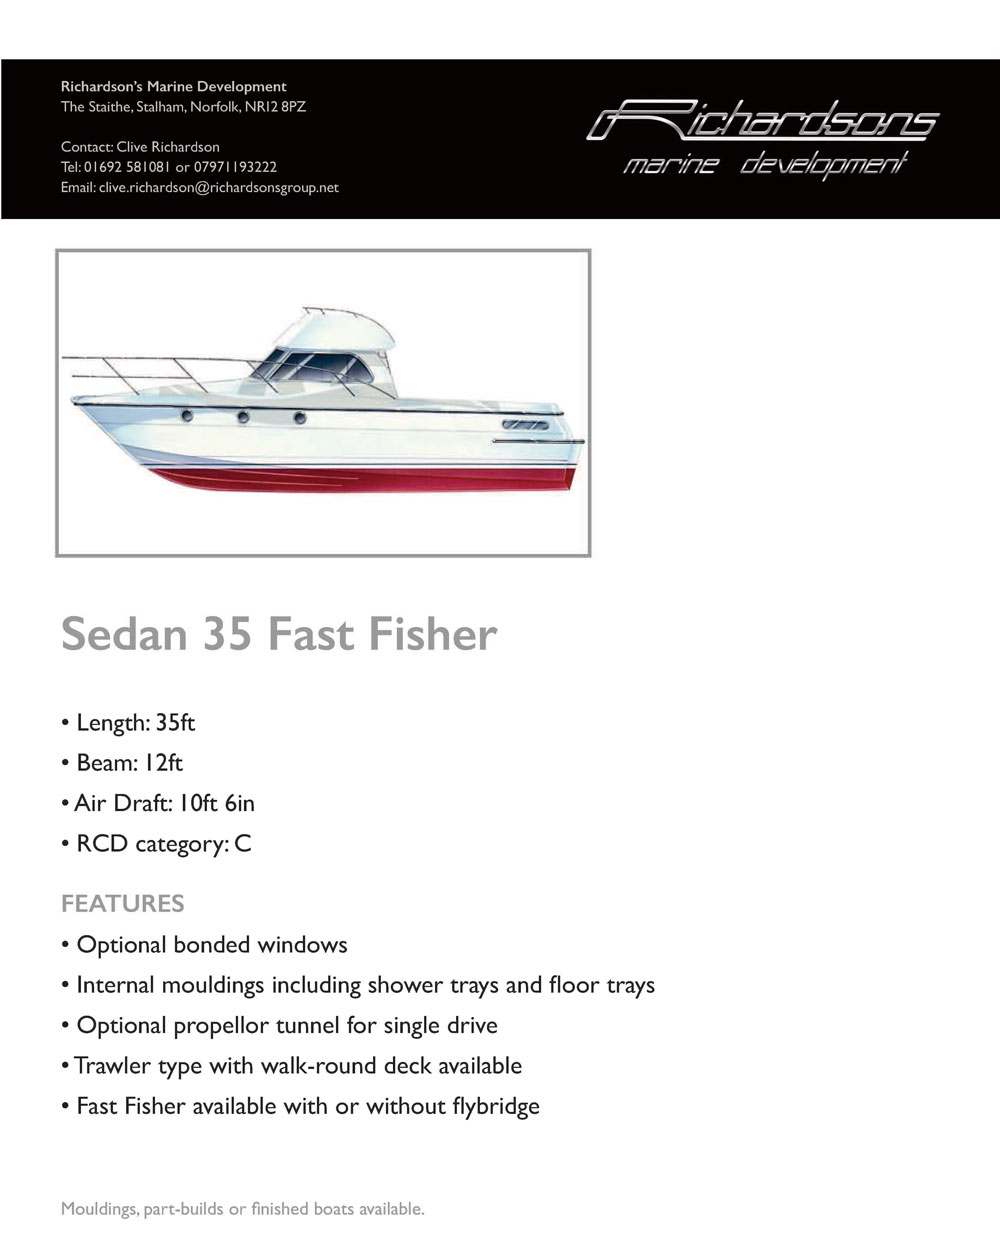 Sedan 35 Fast Fisher